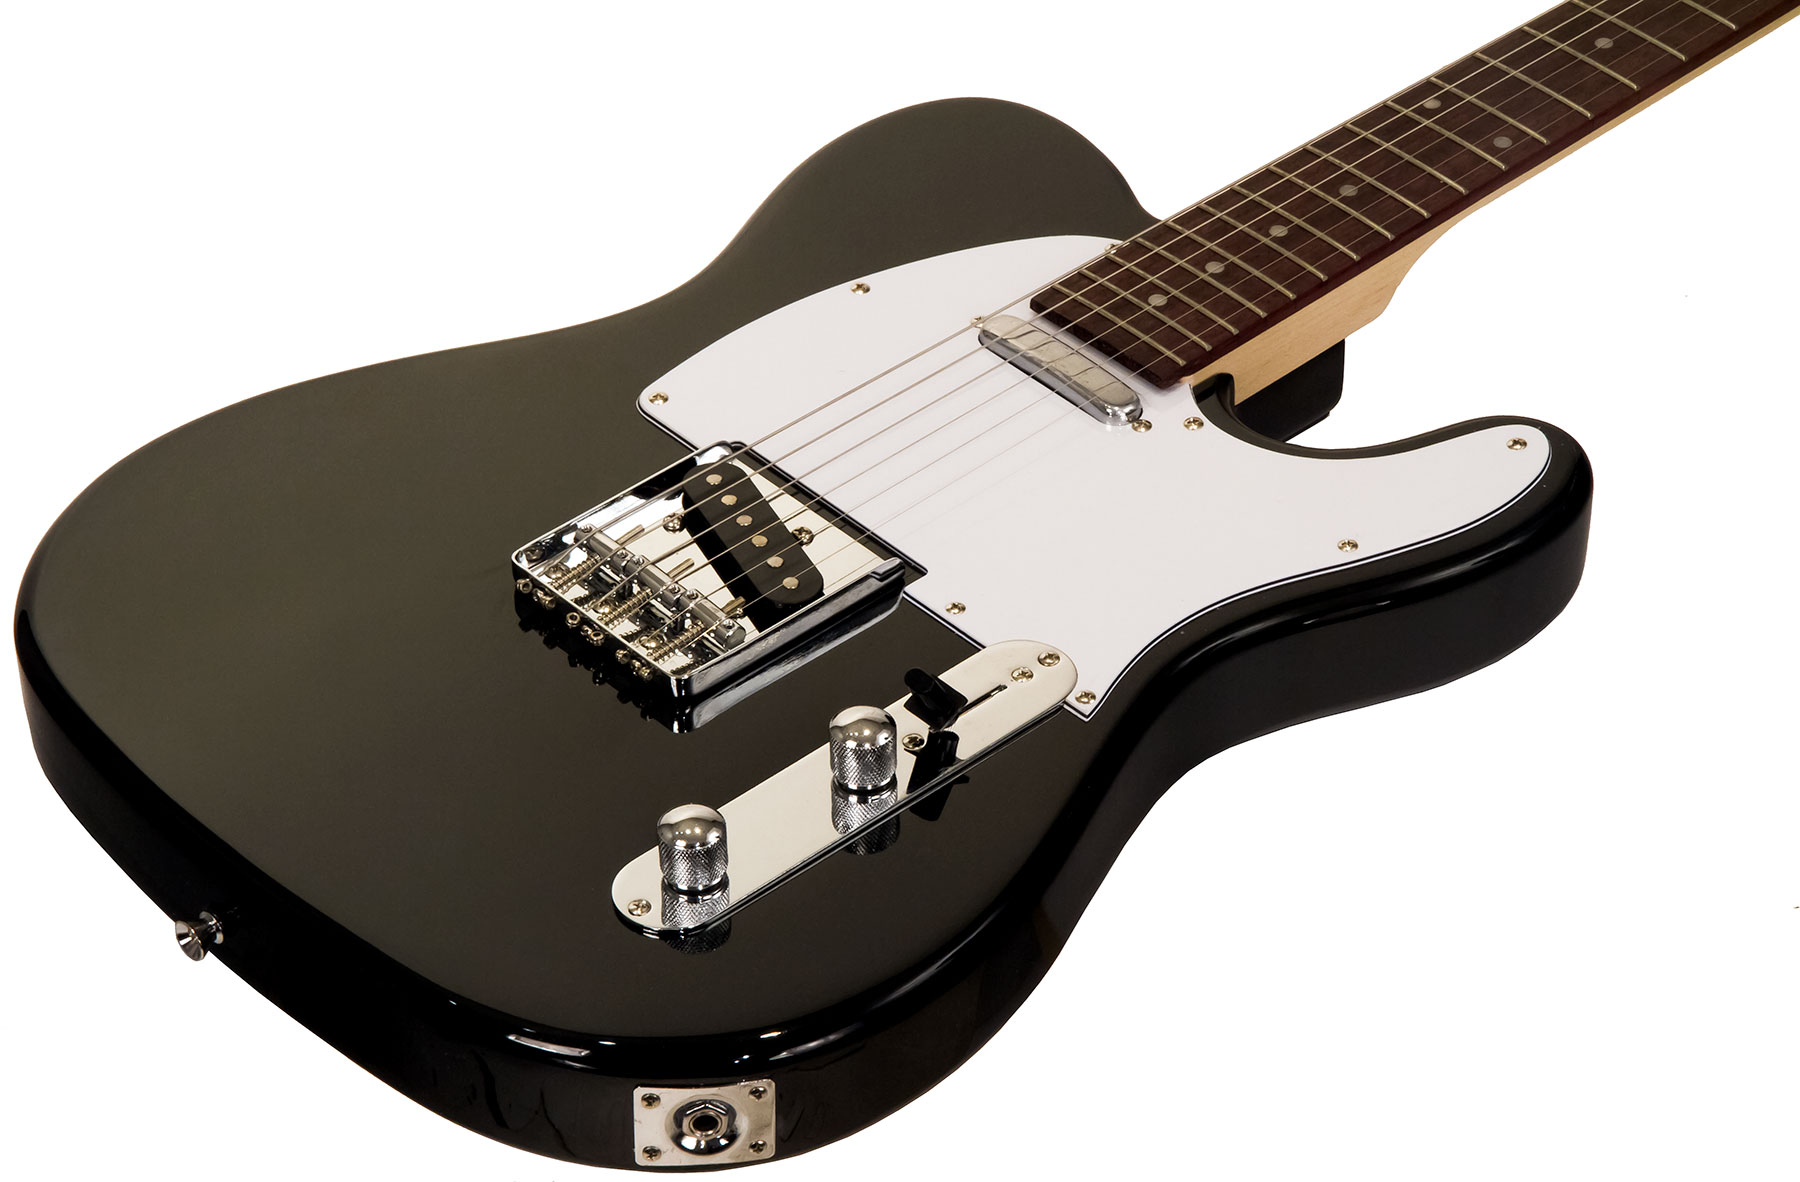 Eastone Tl70 +marshall Mg10g Combo 10 W +housse +courroie +cable +mediators - Black - Elektrische gitaar set - Variation 1